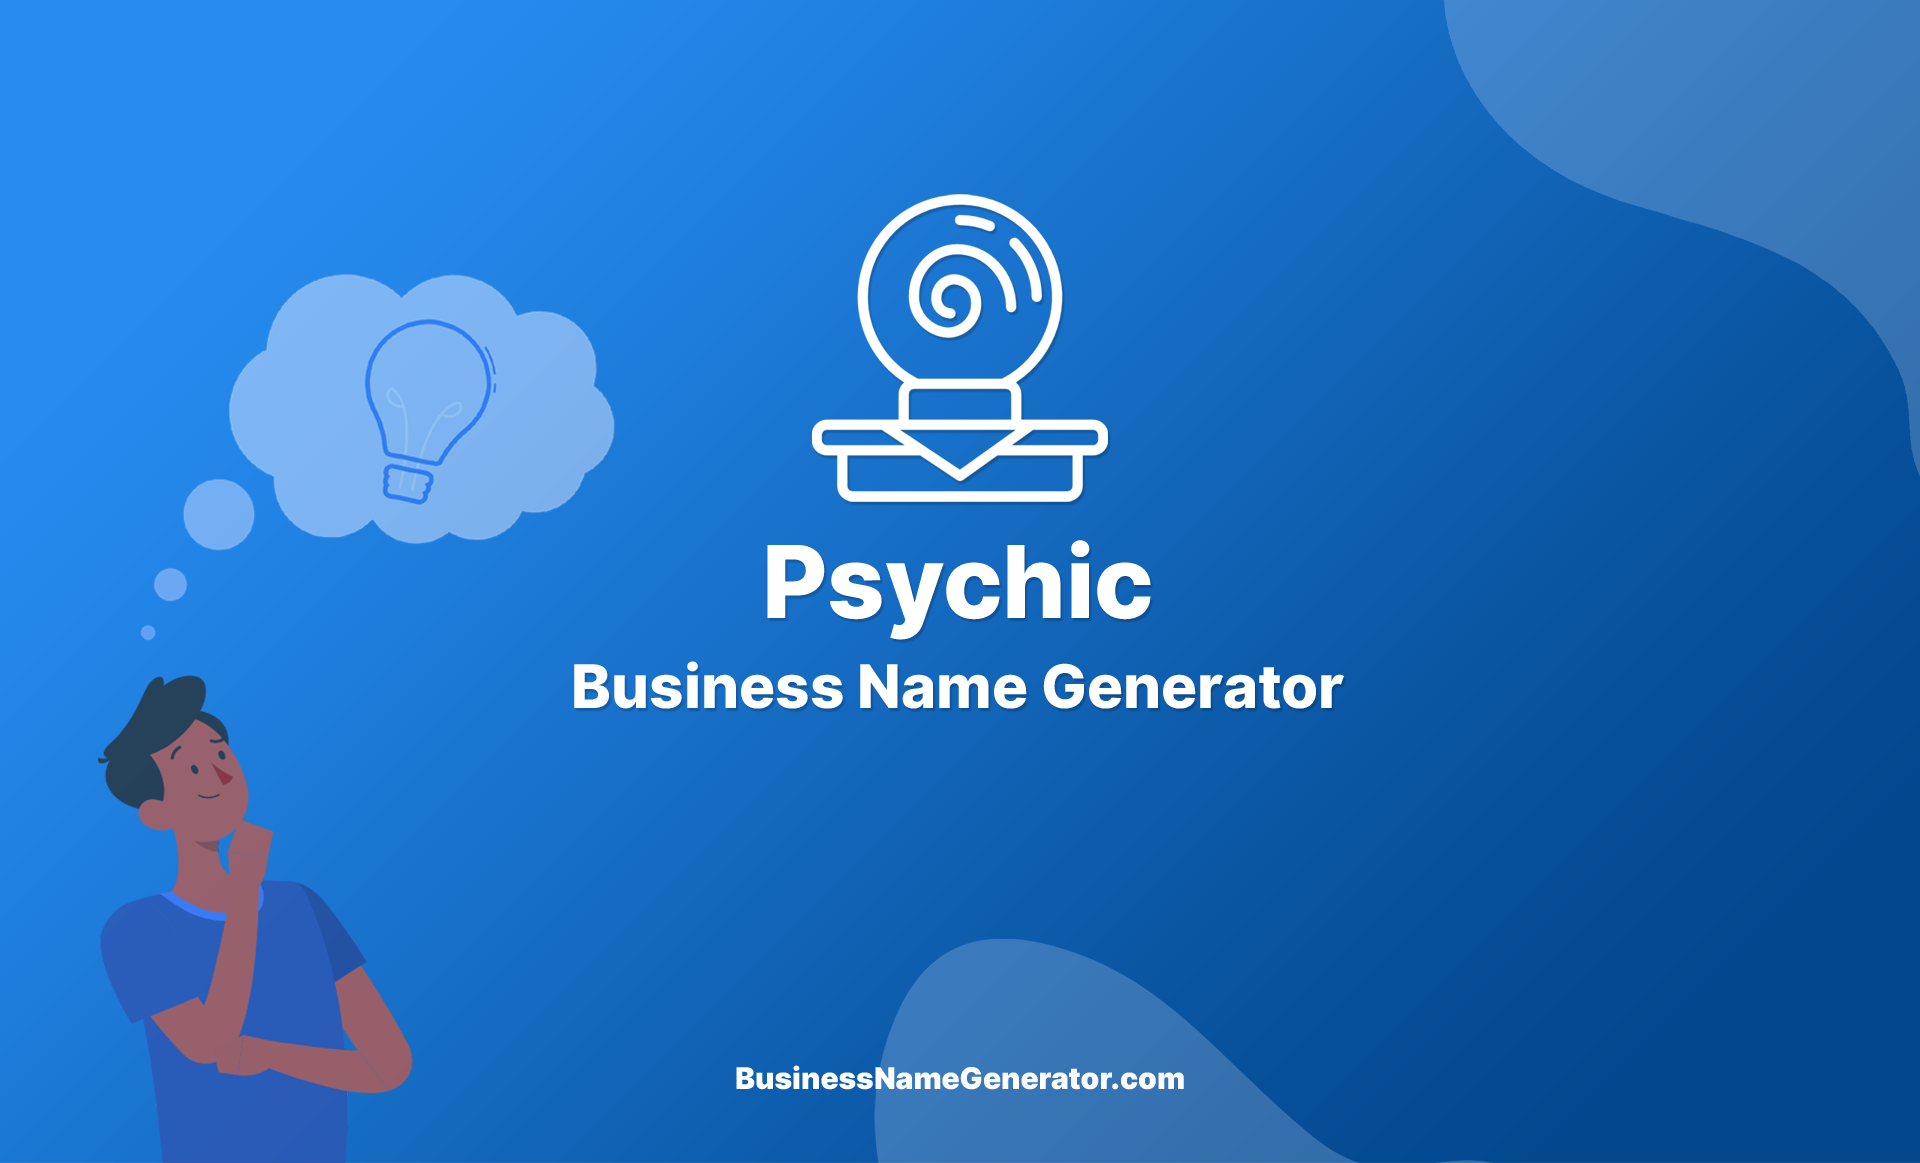 Psychic Business Name Generator